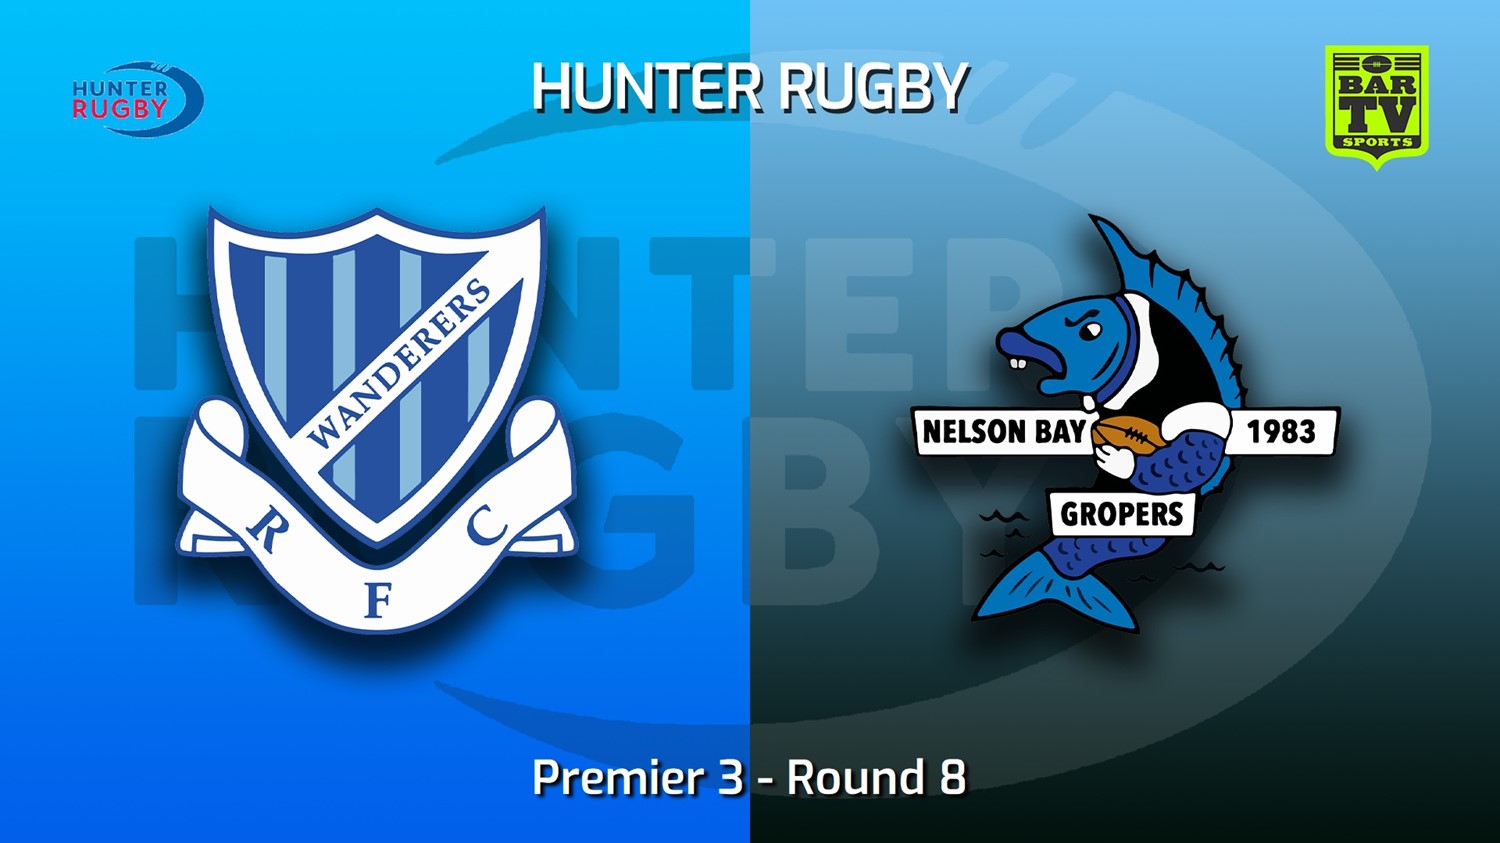 220618-Hunter Rugby Round 8 - Premier 3 - Wanderers v Nelson Bay Gropers Slate Image